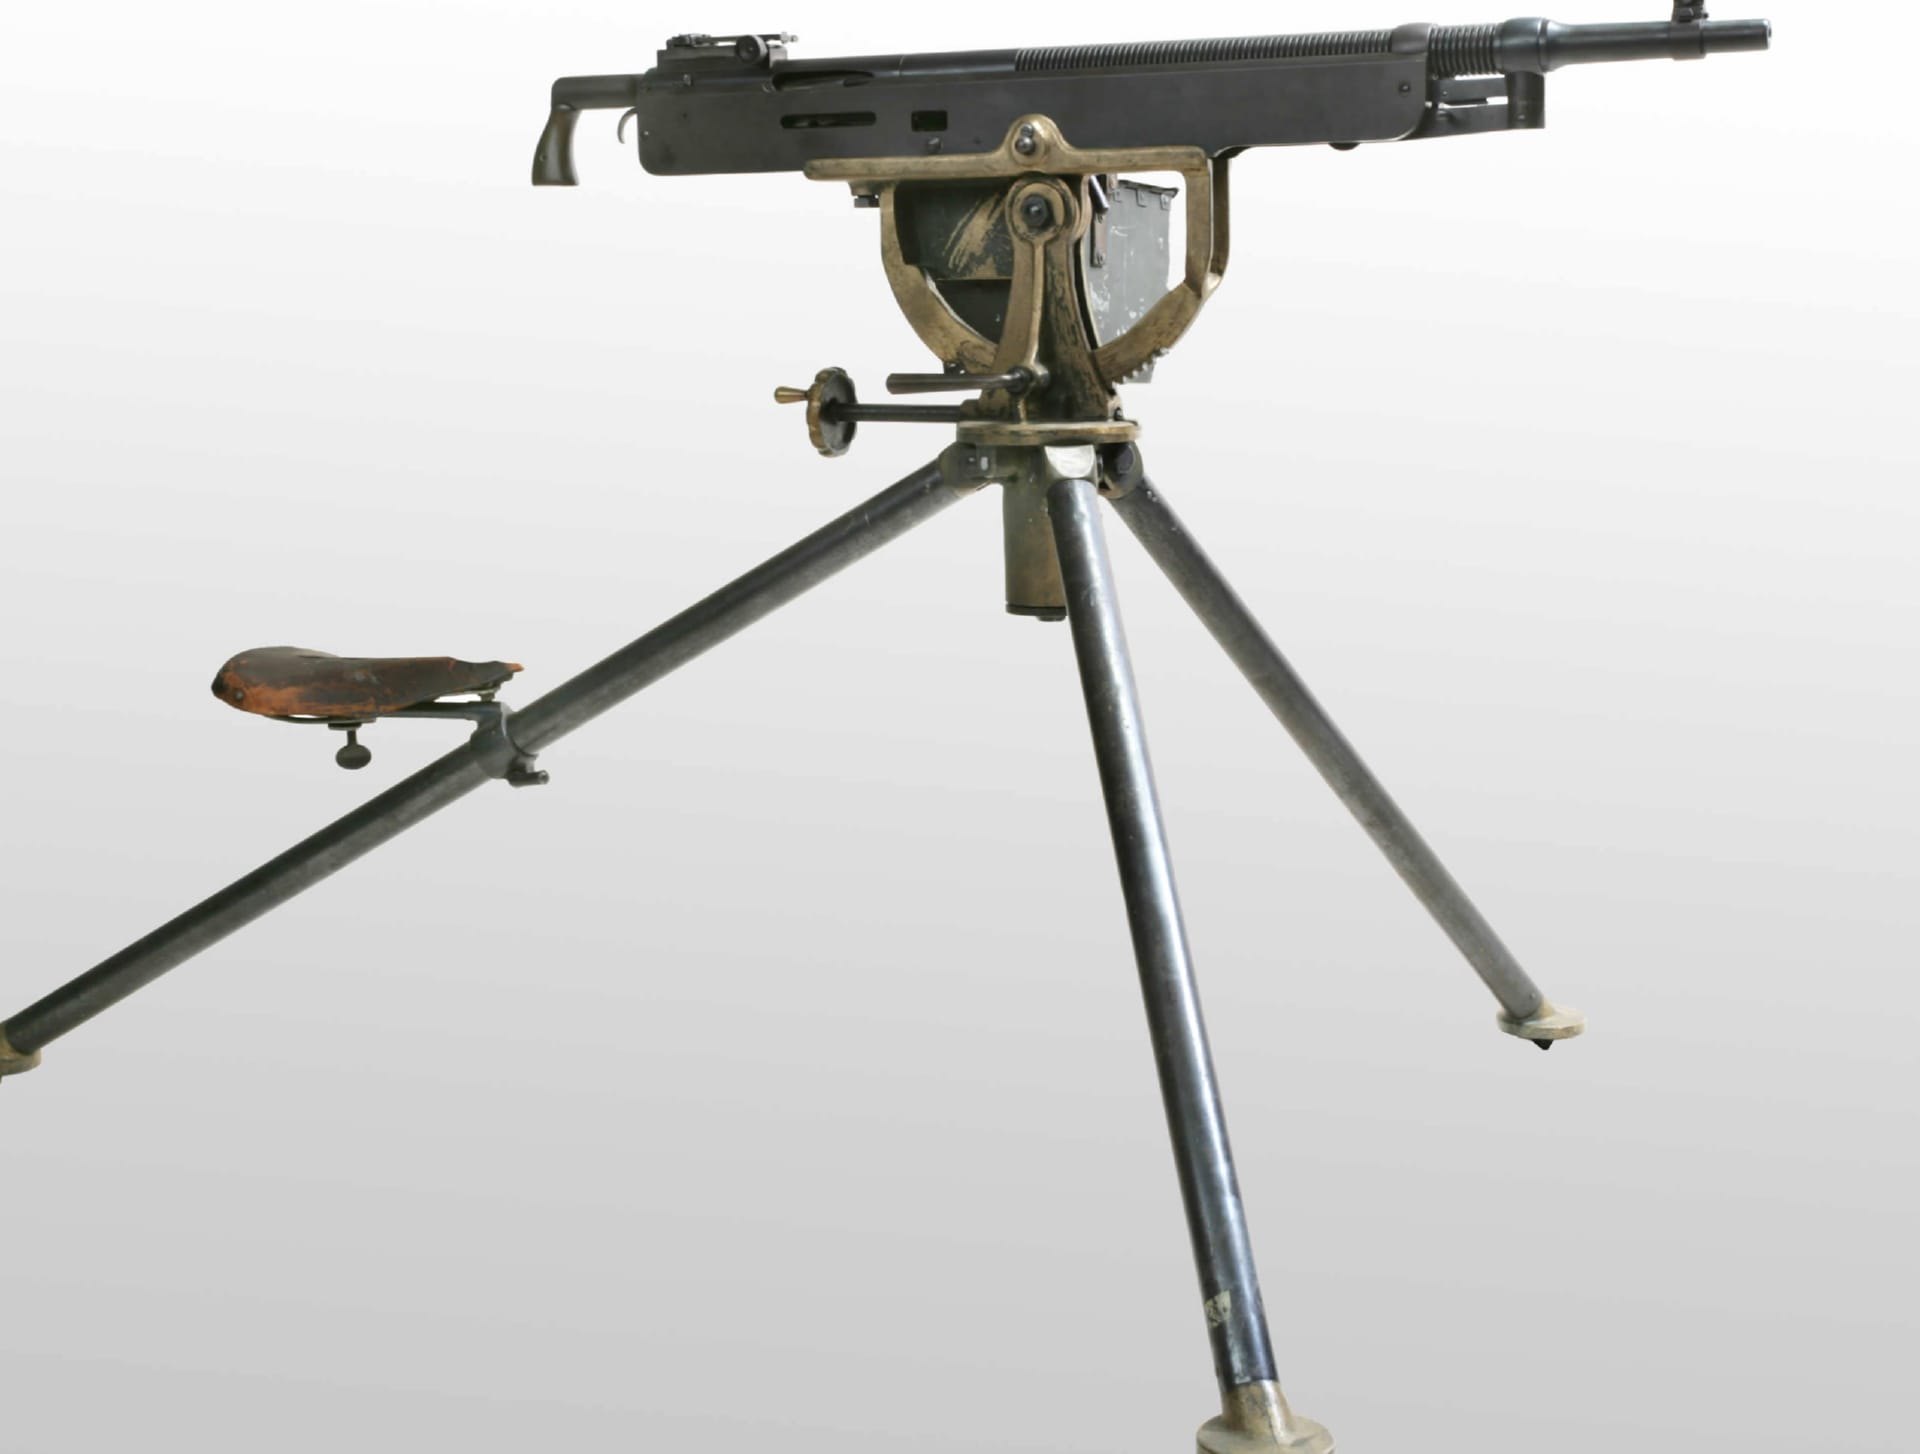 M1895 Colt-Browning Machine Gun at 2048 x 2048 iPad size wallpapers HD quality